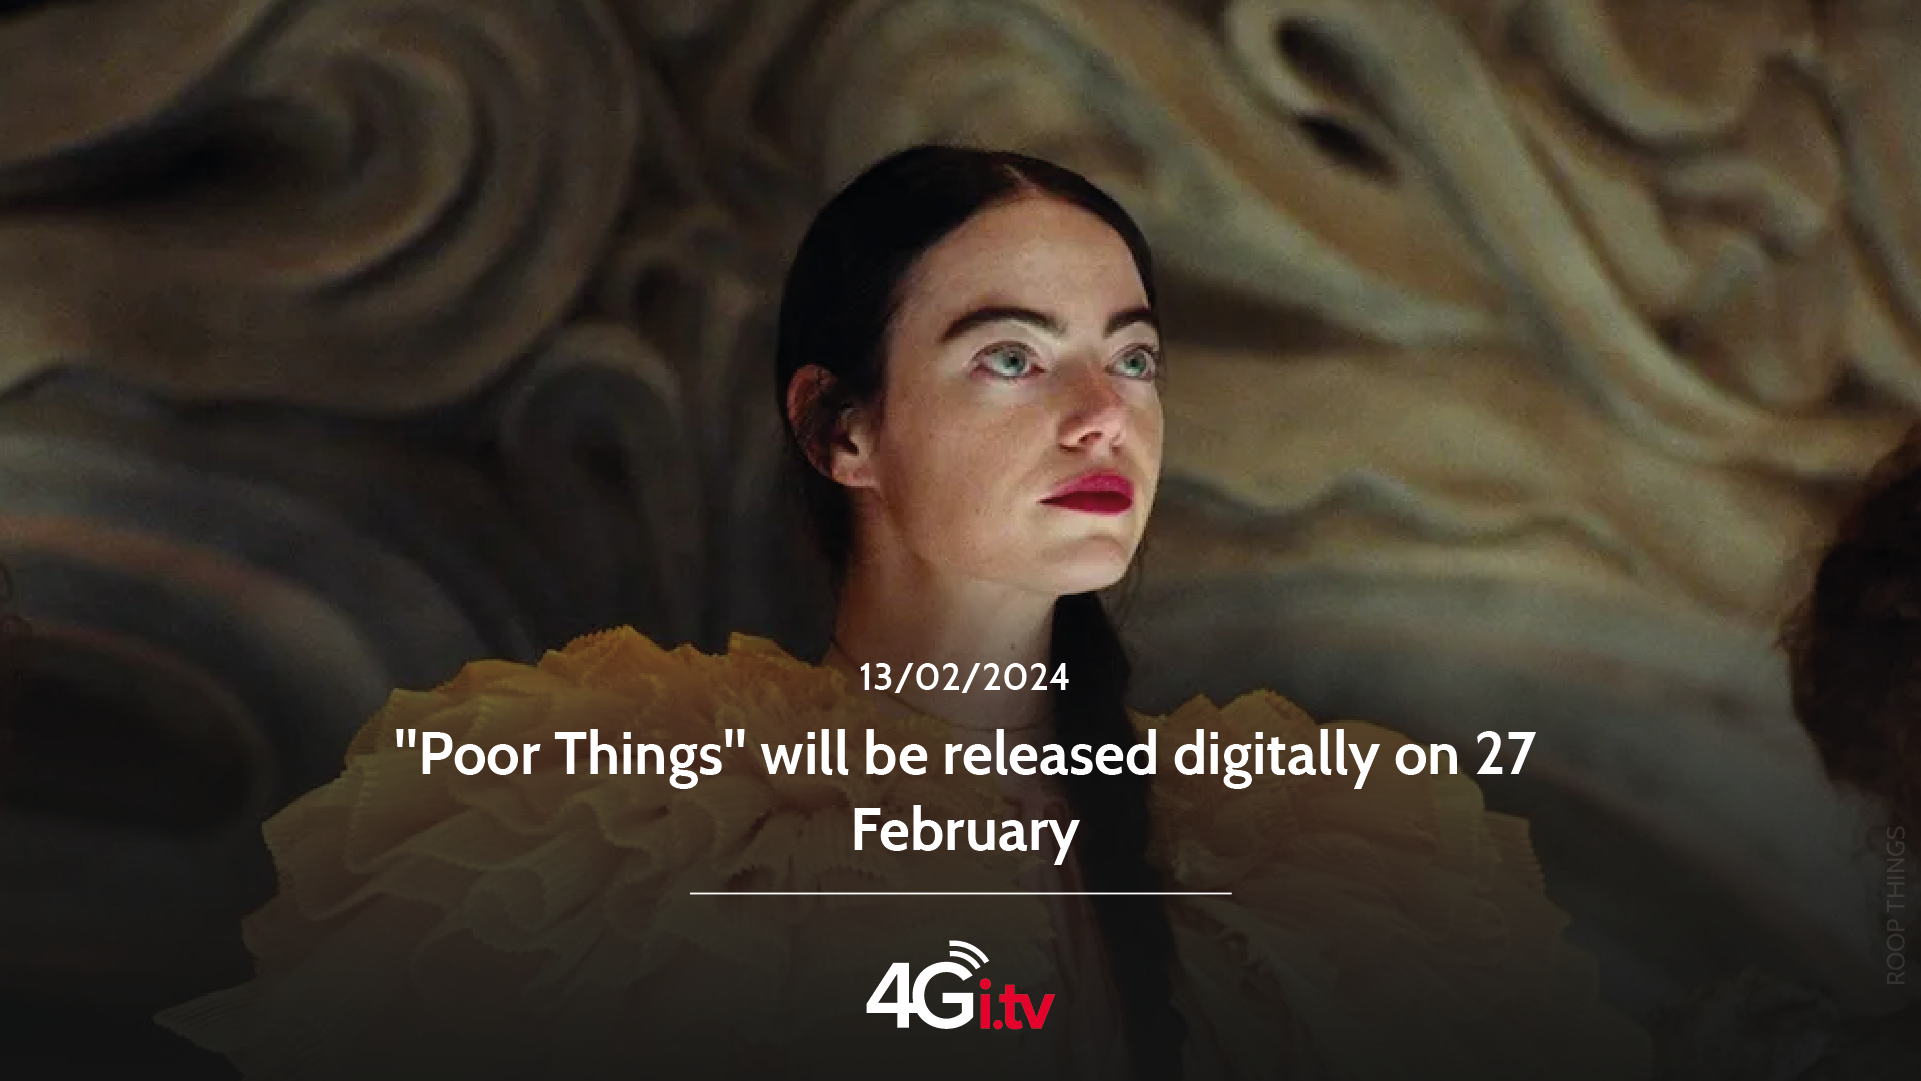 Подробнее о статье “Poor Things” will be released digitally on 27 February 